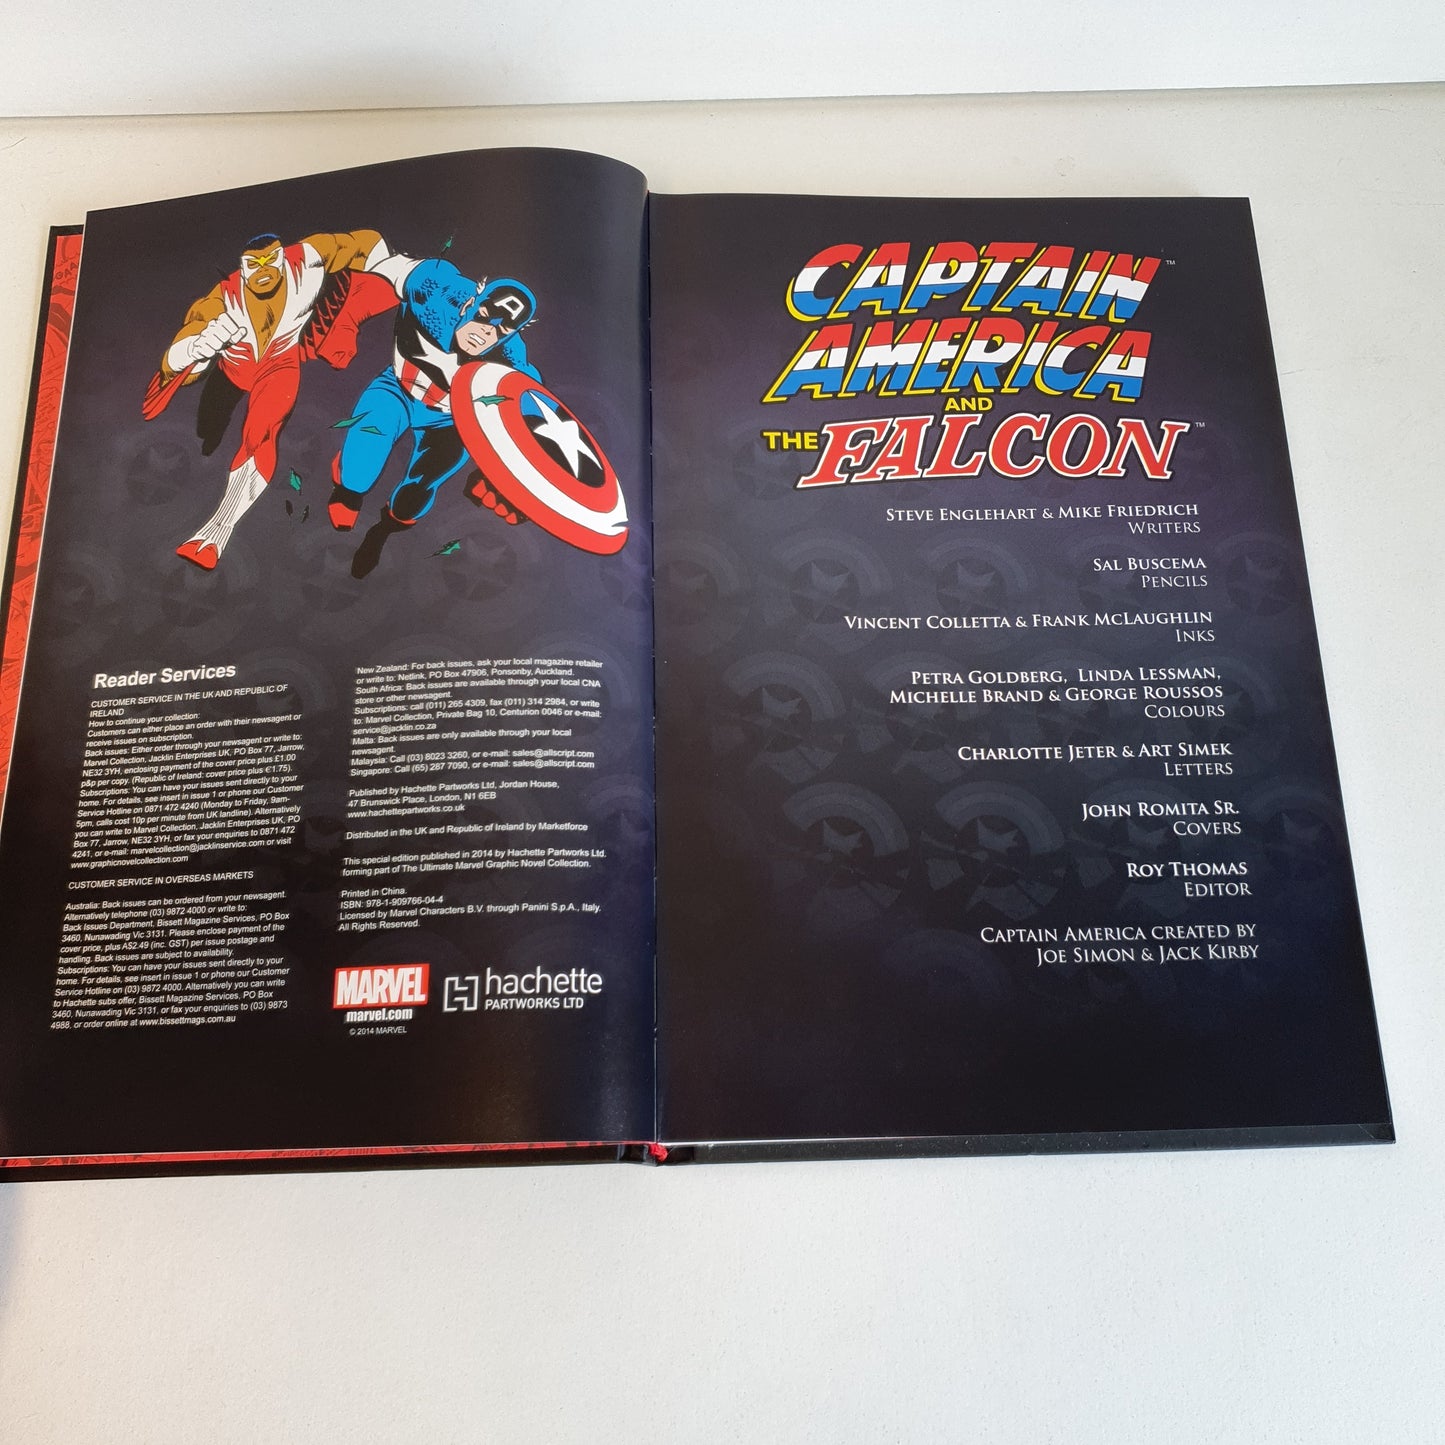 Captain America and the Falcon Secret Empire by Englehart, Friedrich & Buscema (2014)